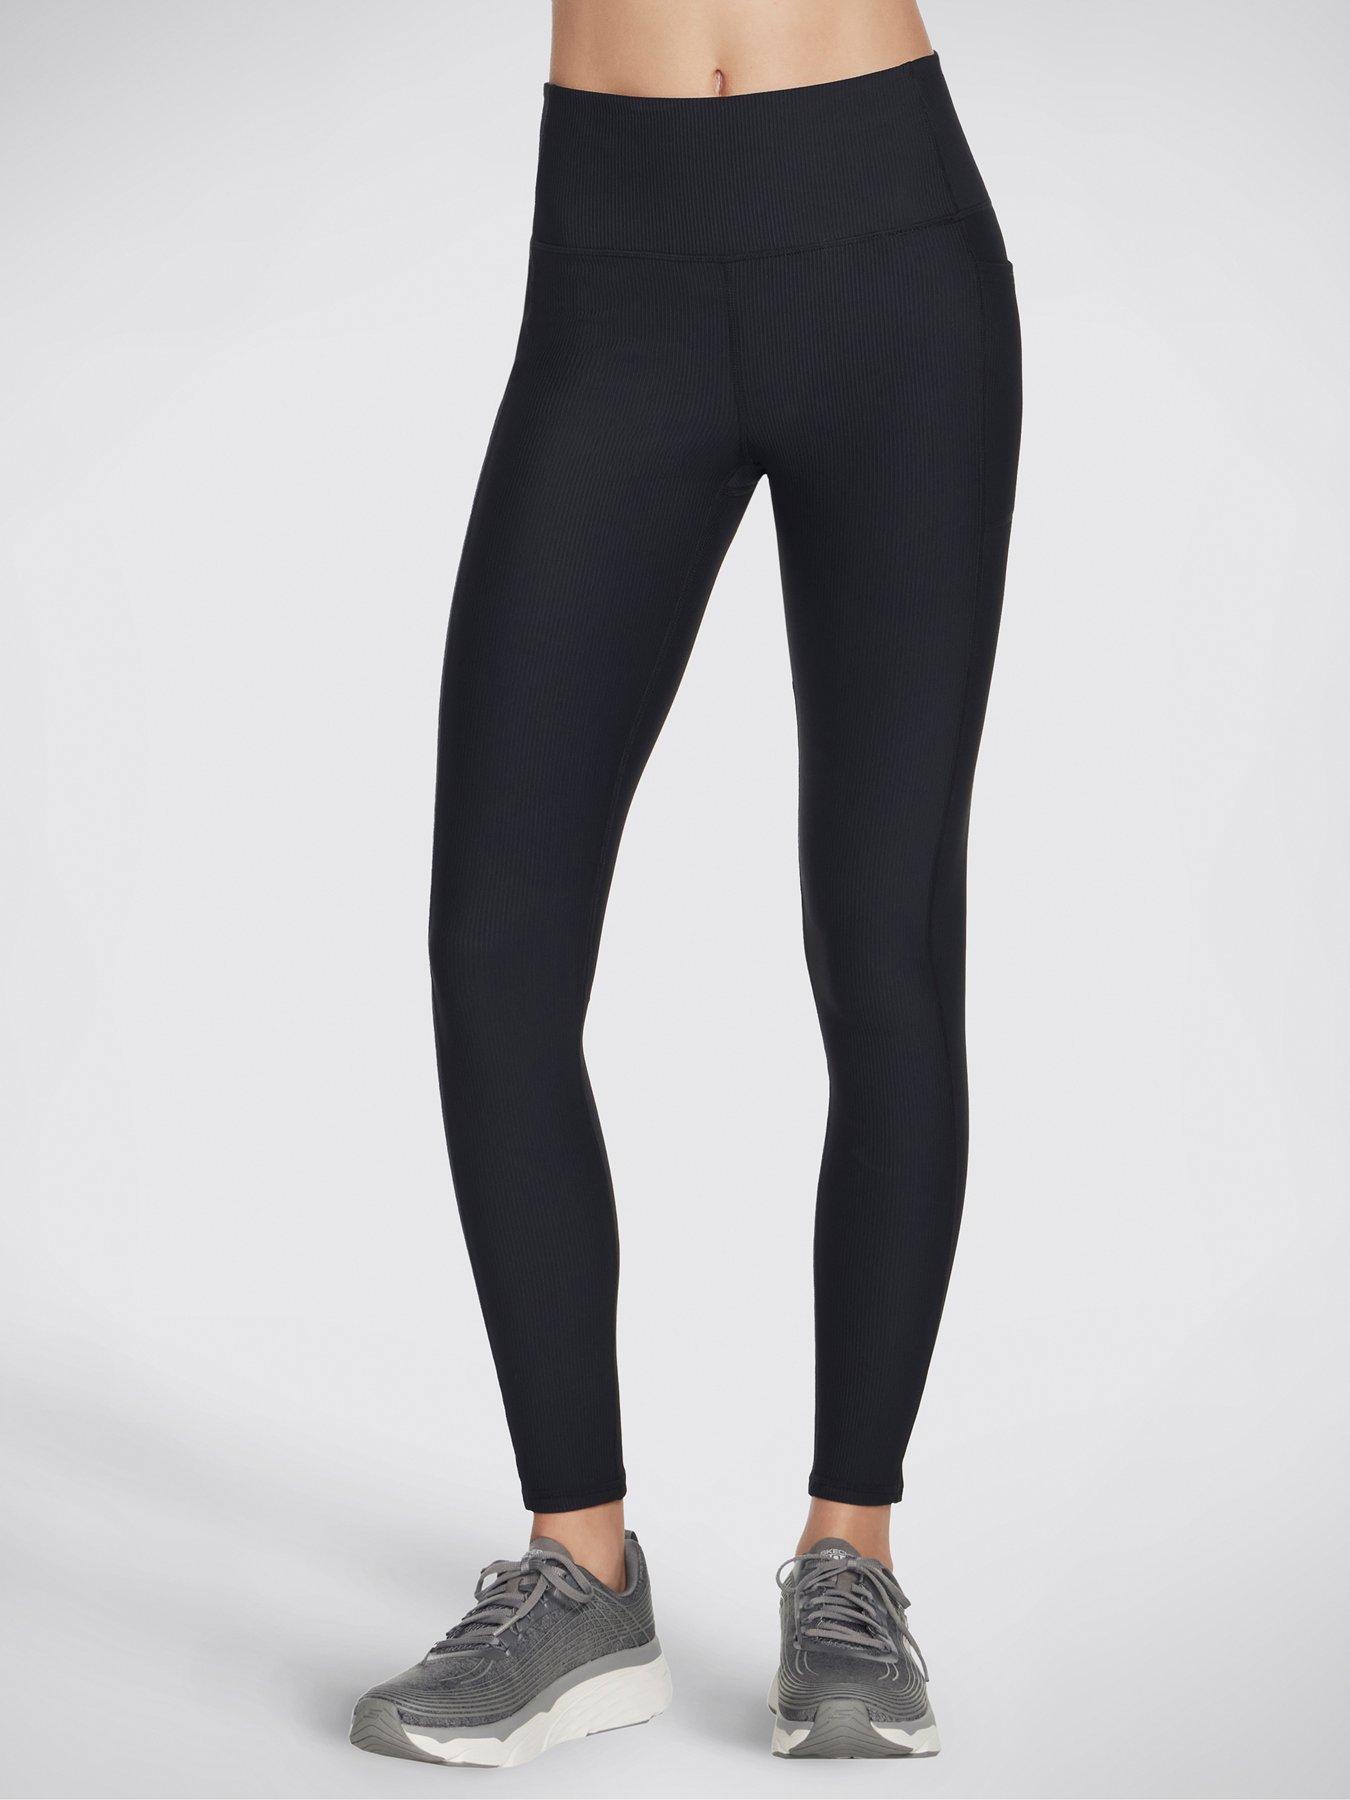 Long Tall Sally Slim Leg Yoga Pant 34in - Black